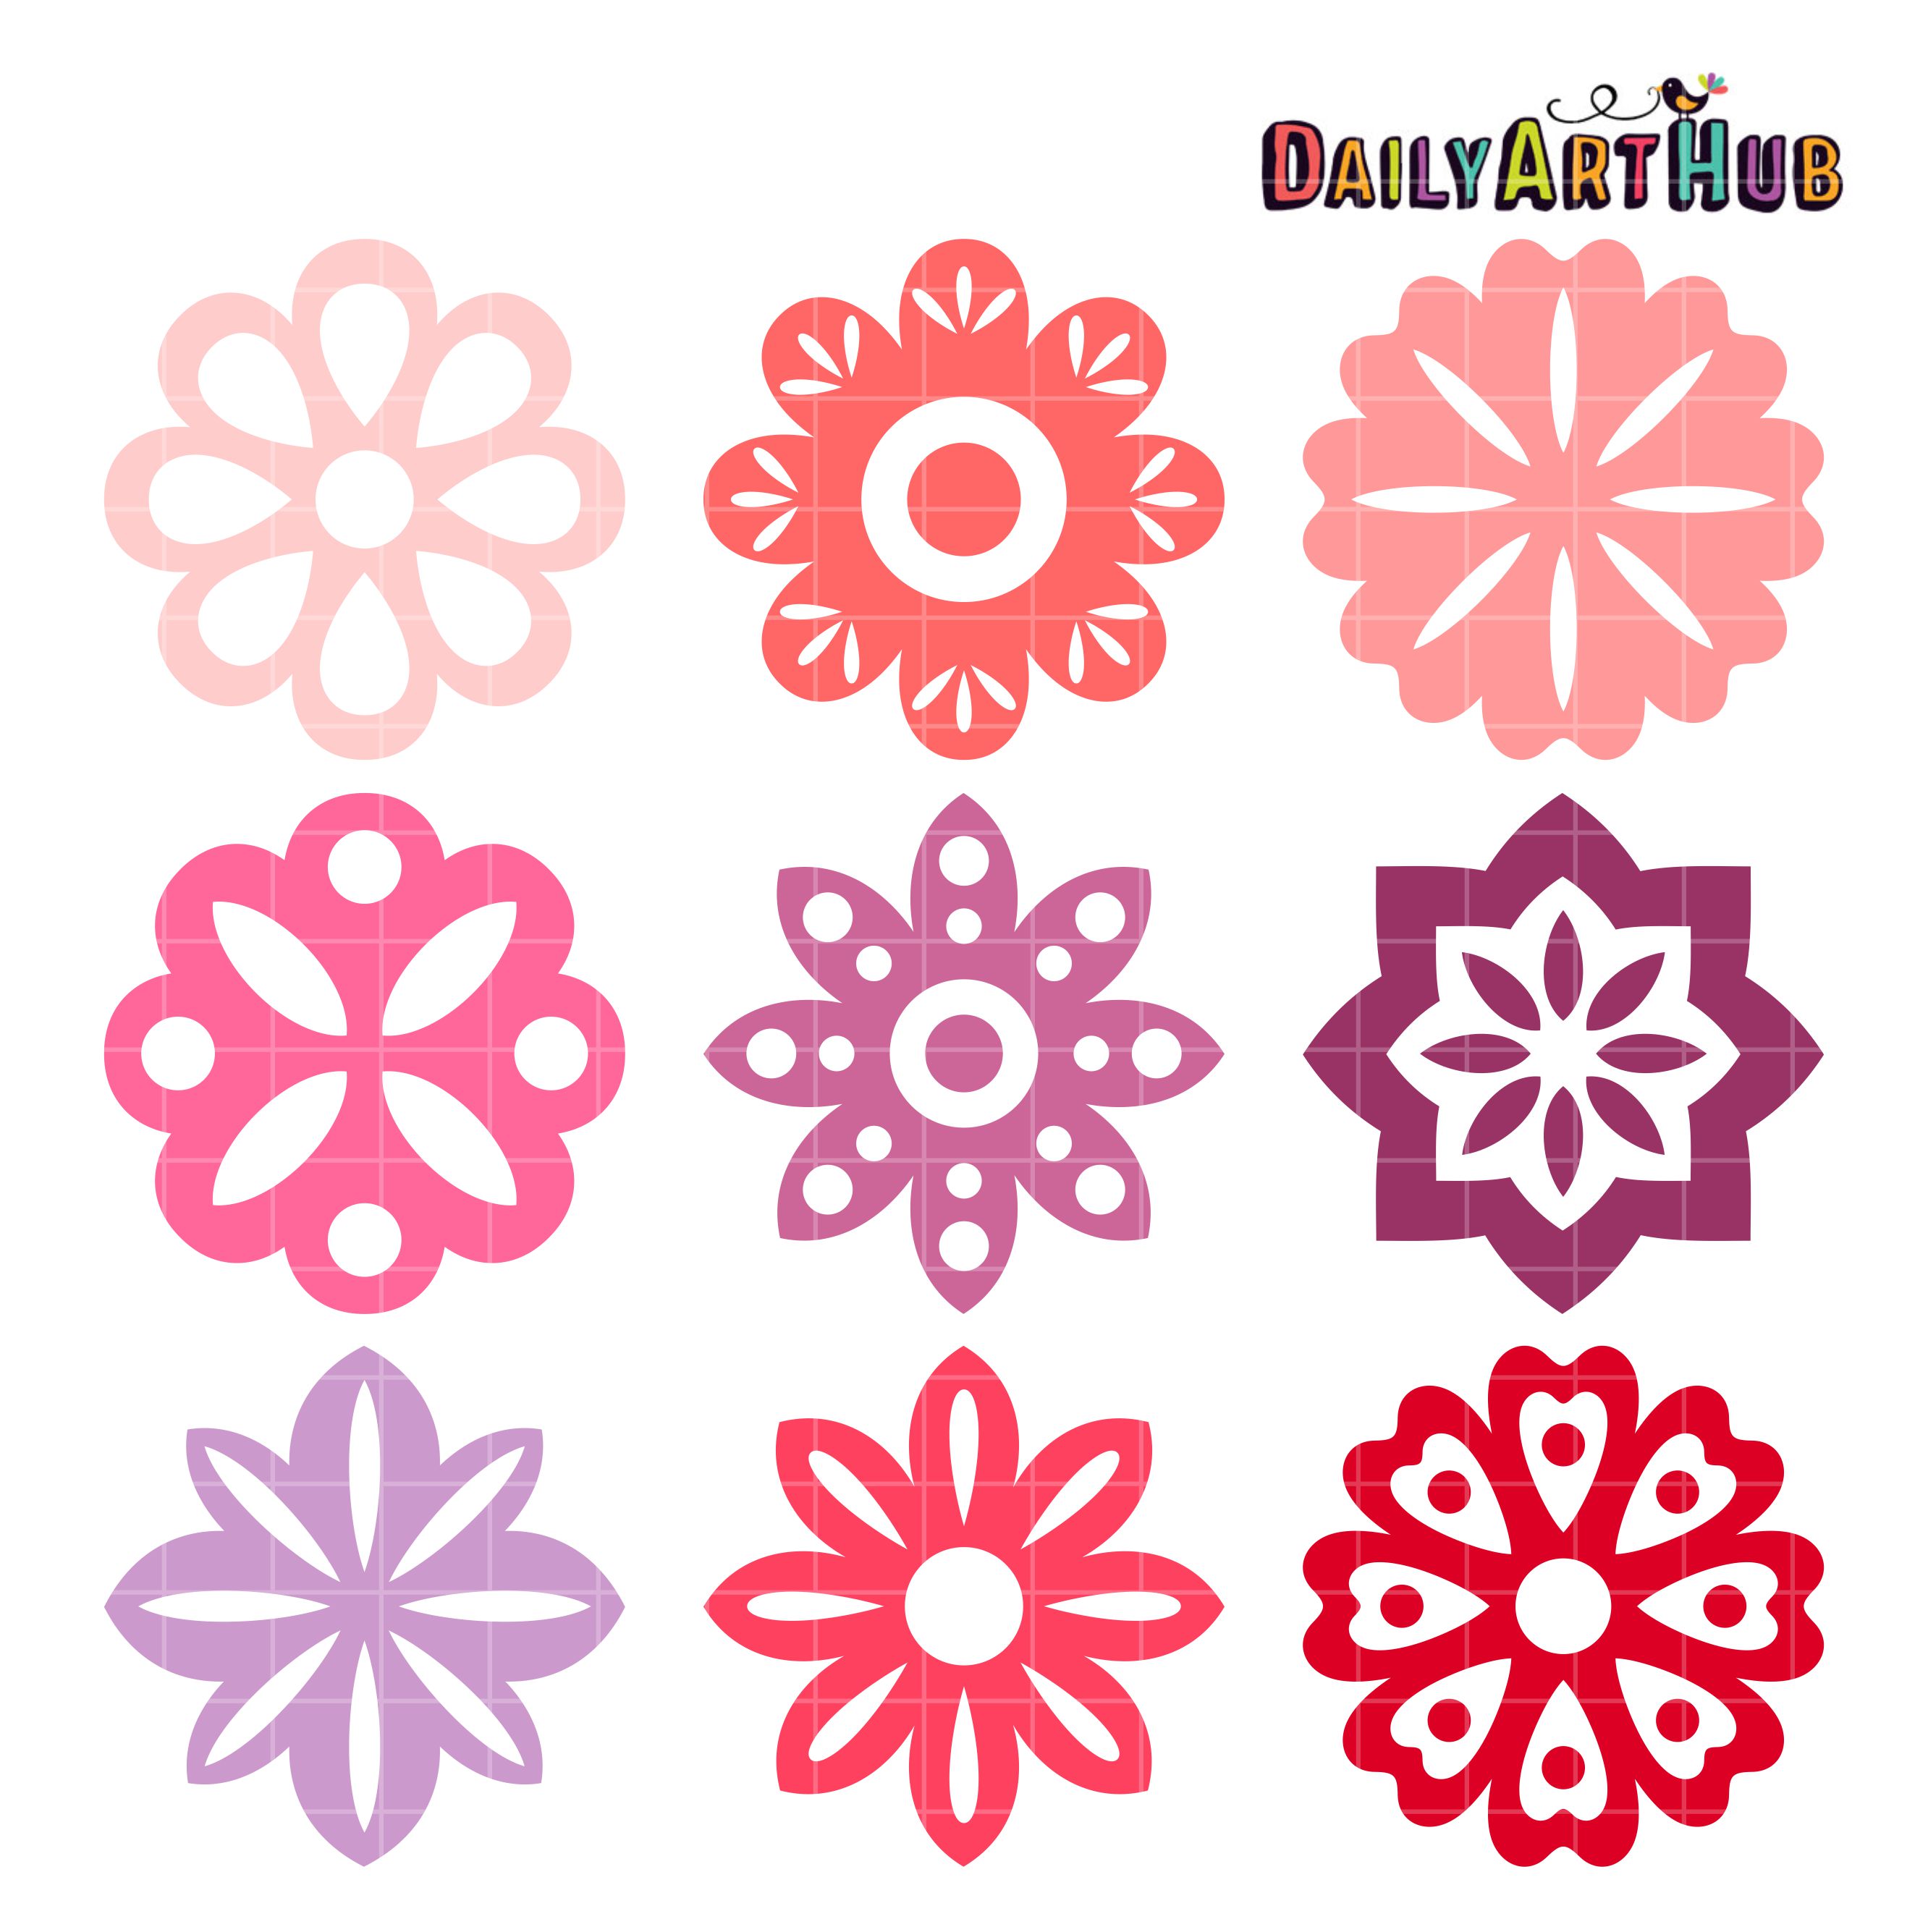 Simple Flower Shapes Clip Art Set | Daily Art Hub